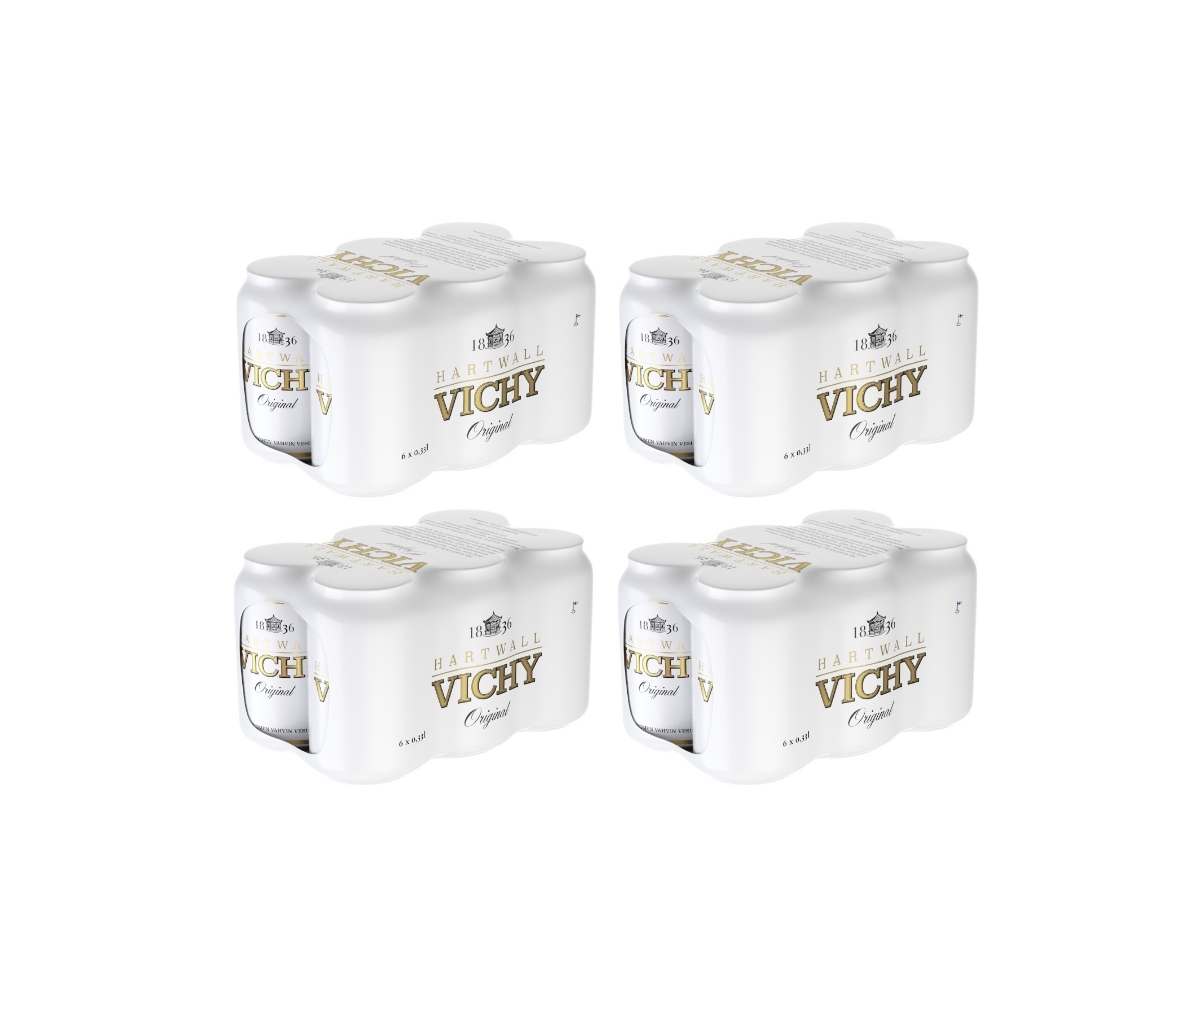 Vichy Original 24-pack